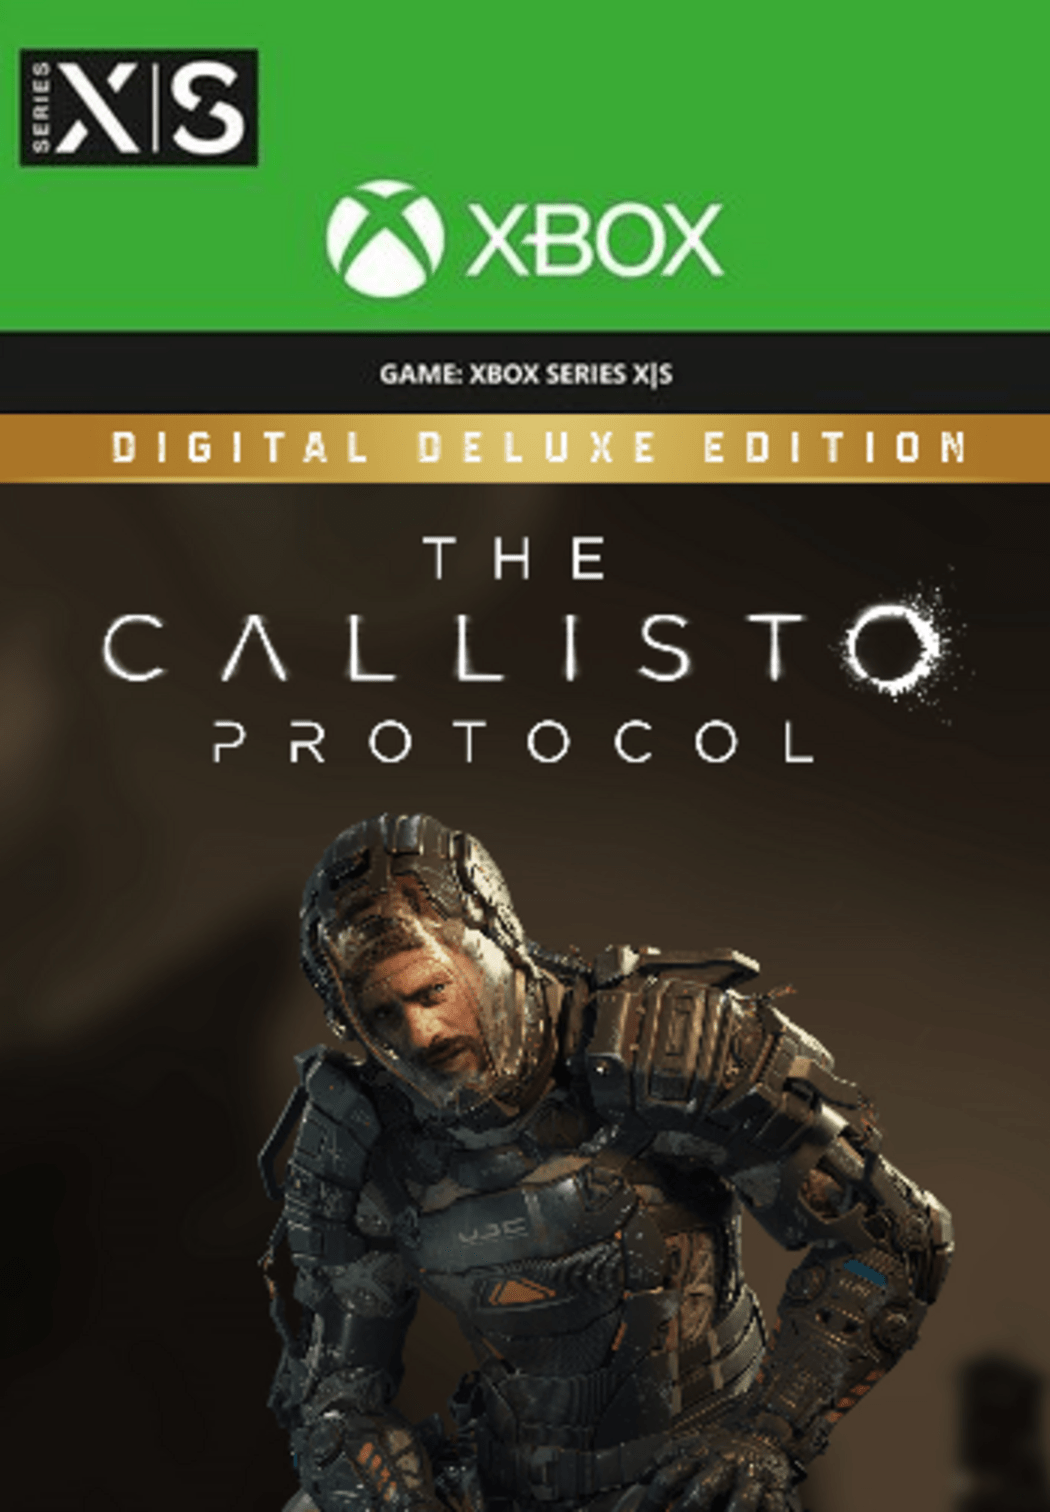 The Callisto Protocol Review (Xbox Series X, S)